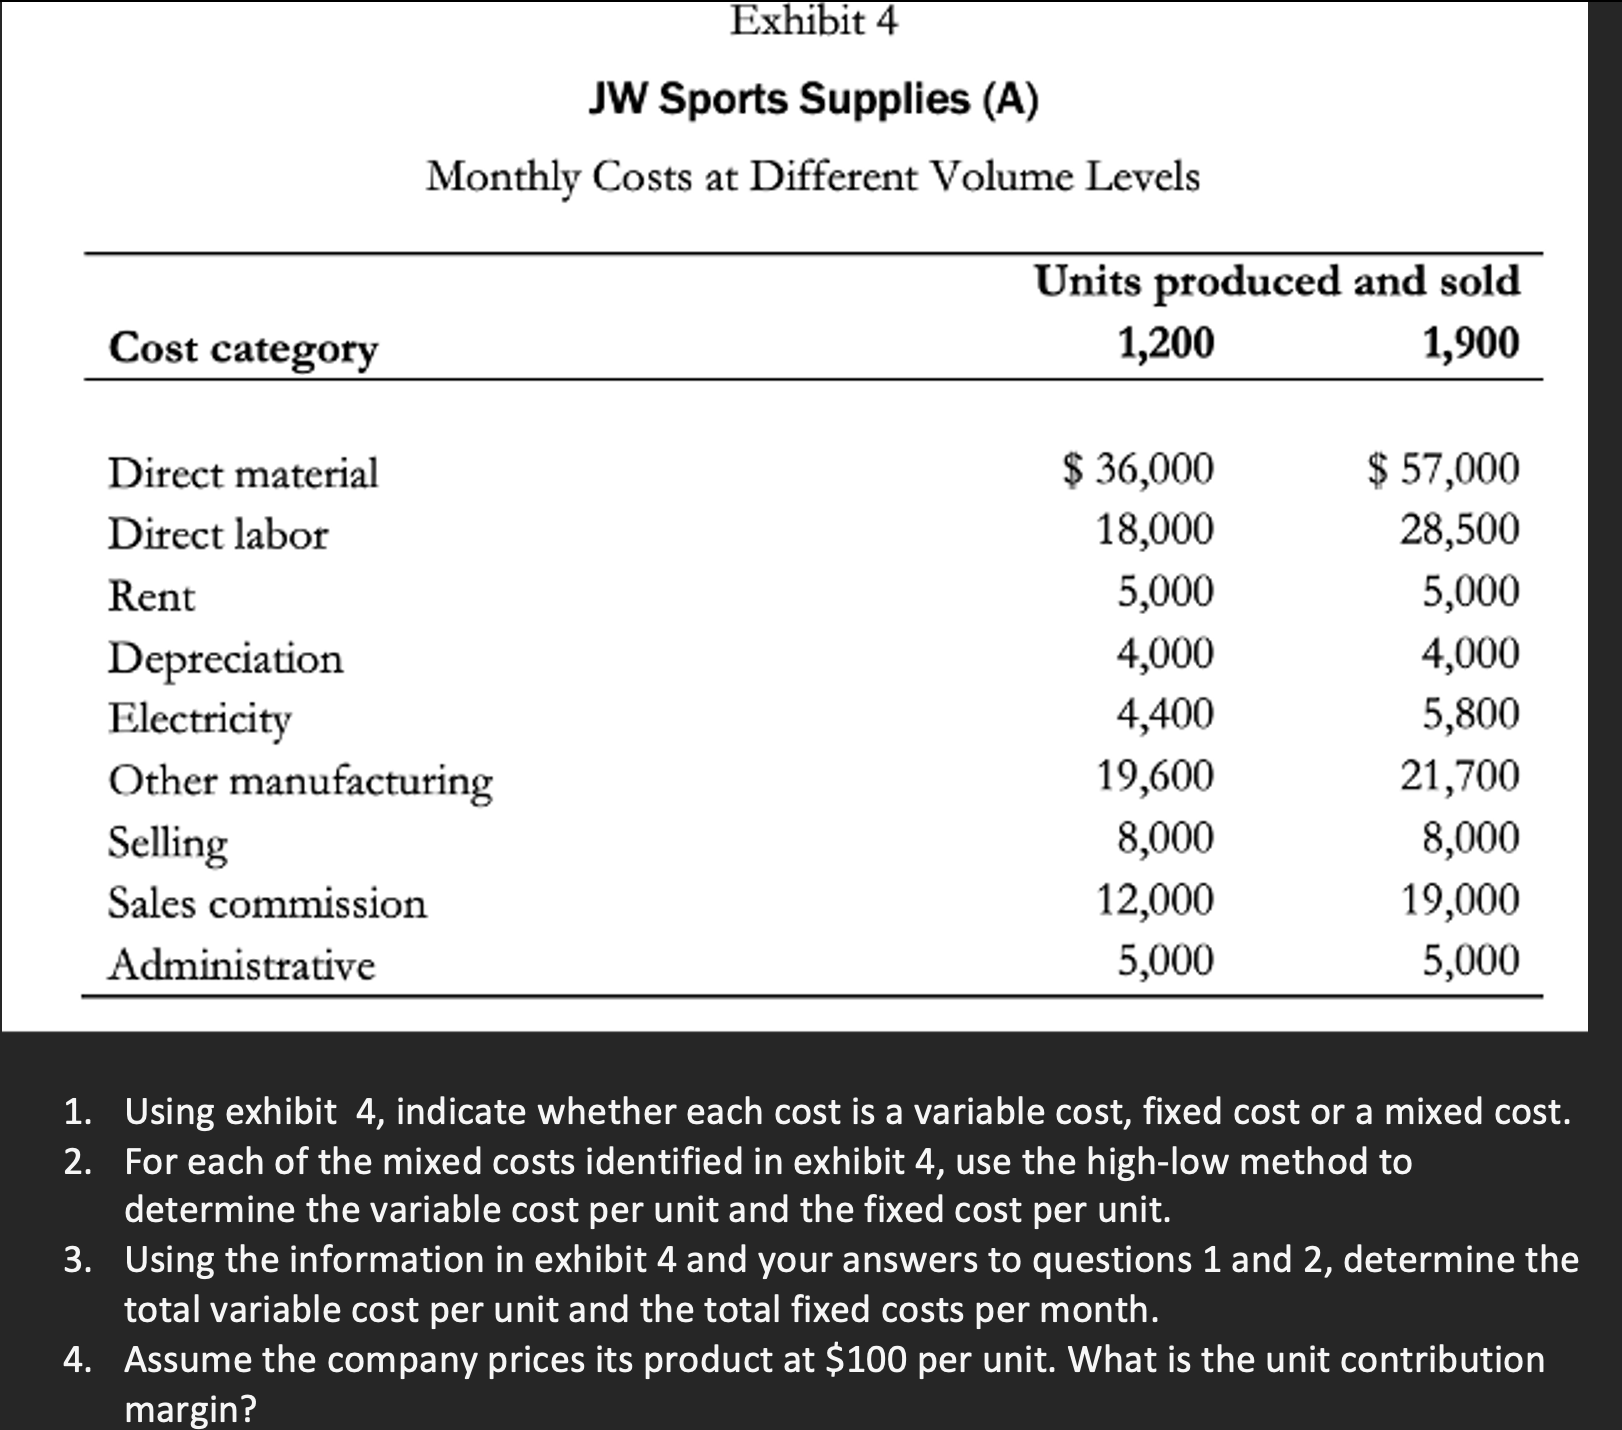 jw sports supplies case study solution